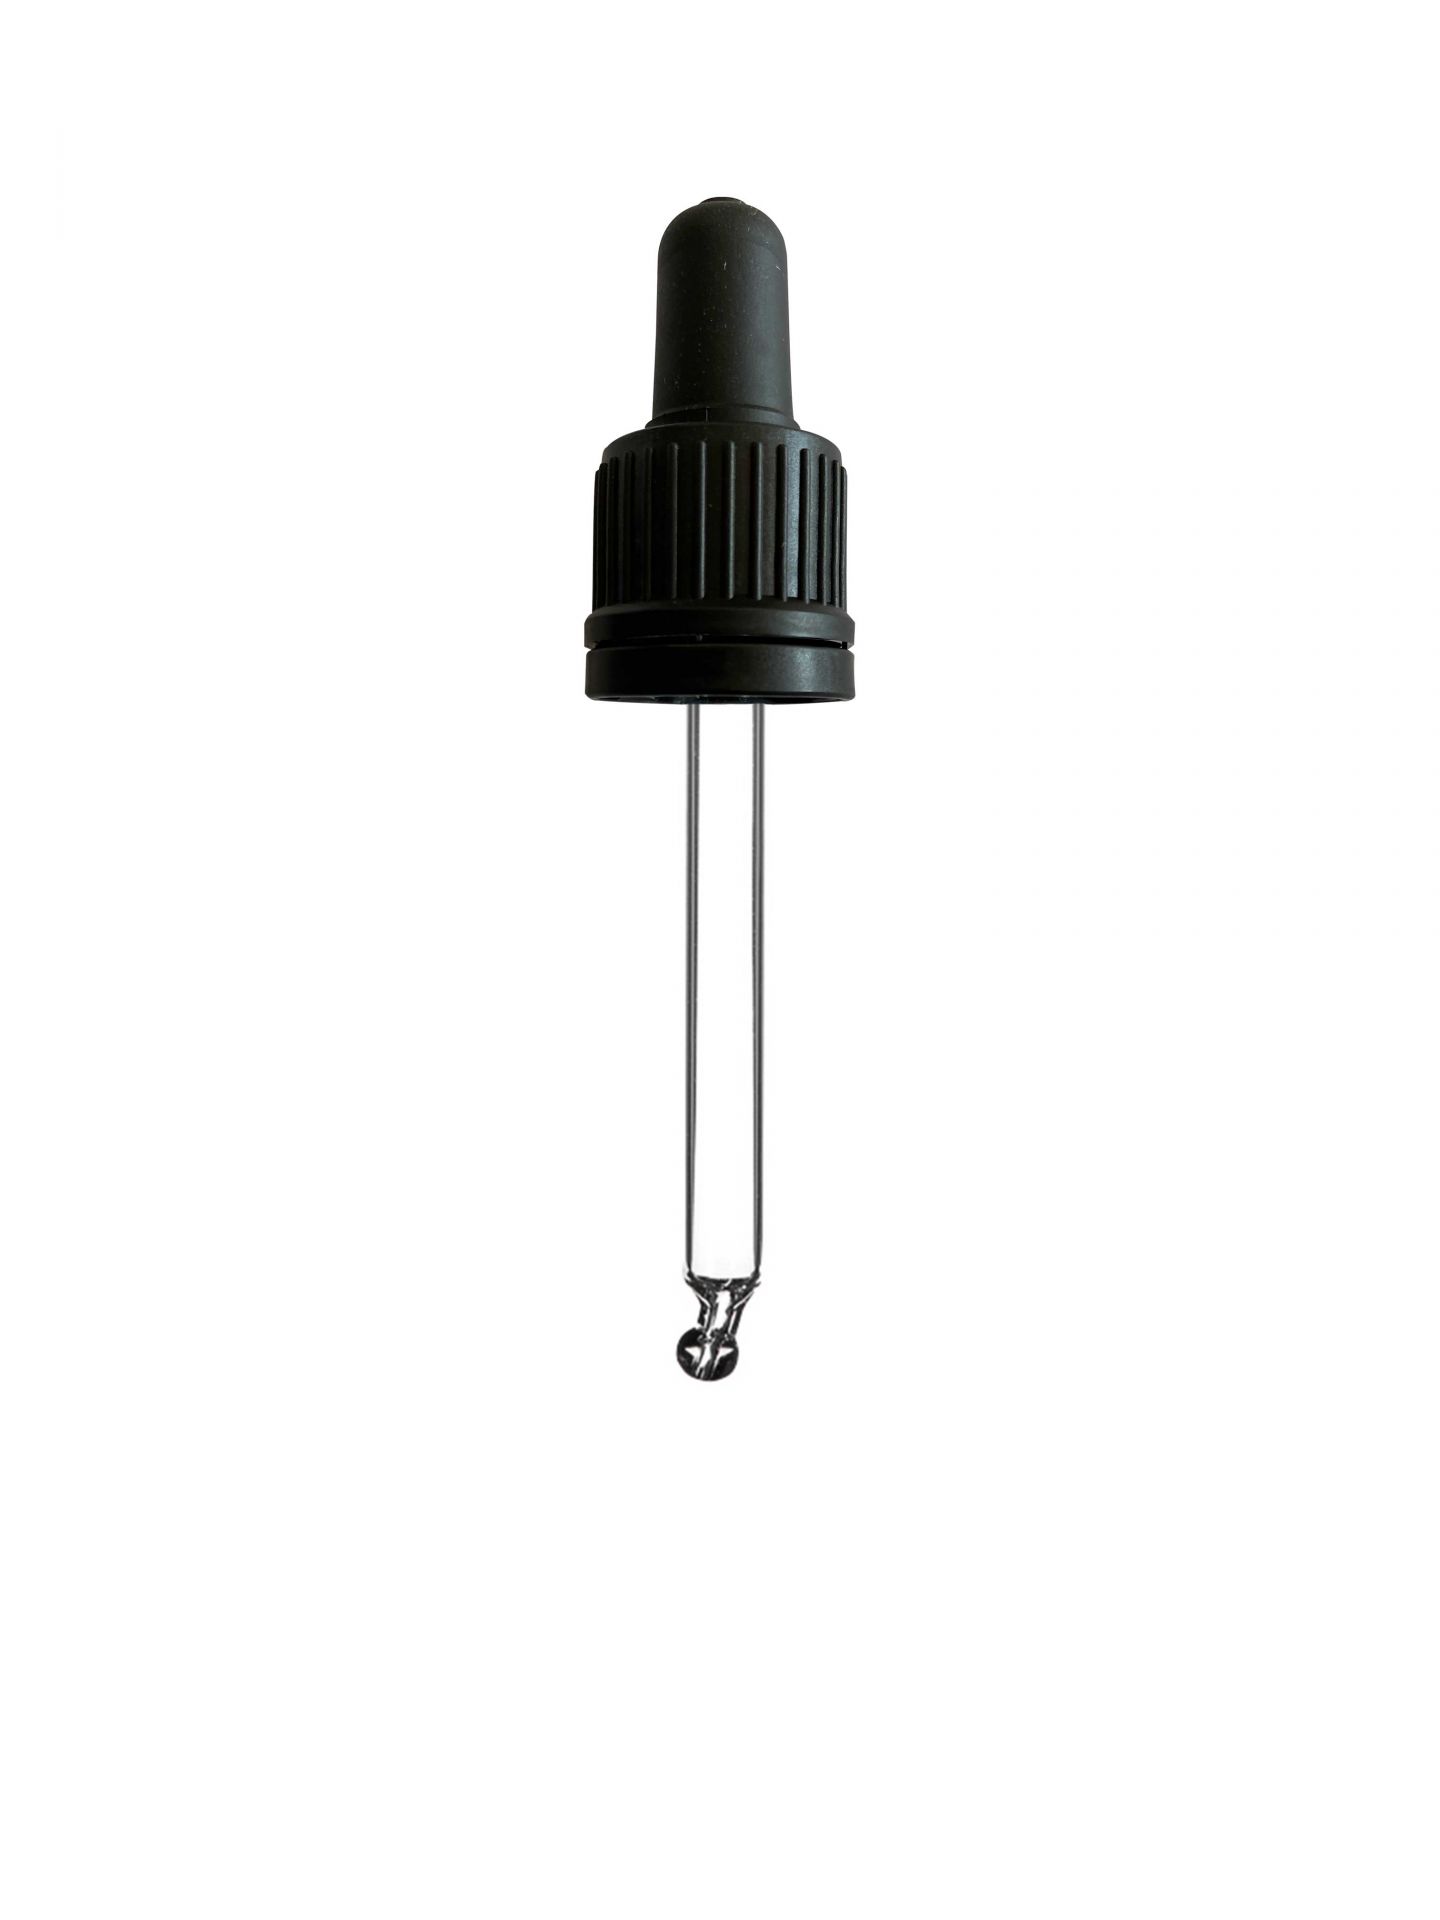 Pipette tamper evident DIN18, II, black, ribbed, bulb TPE, dose 0.7ml, bent ball tip (Orion 30)